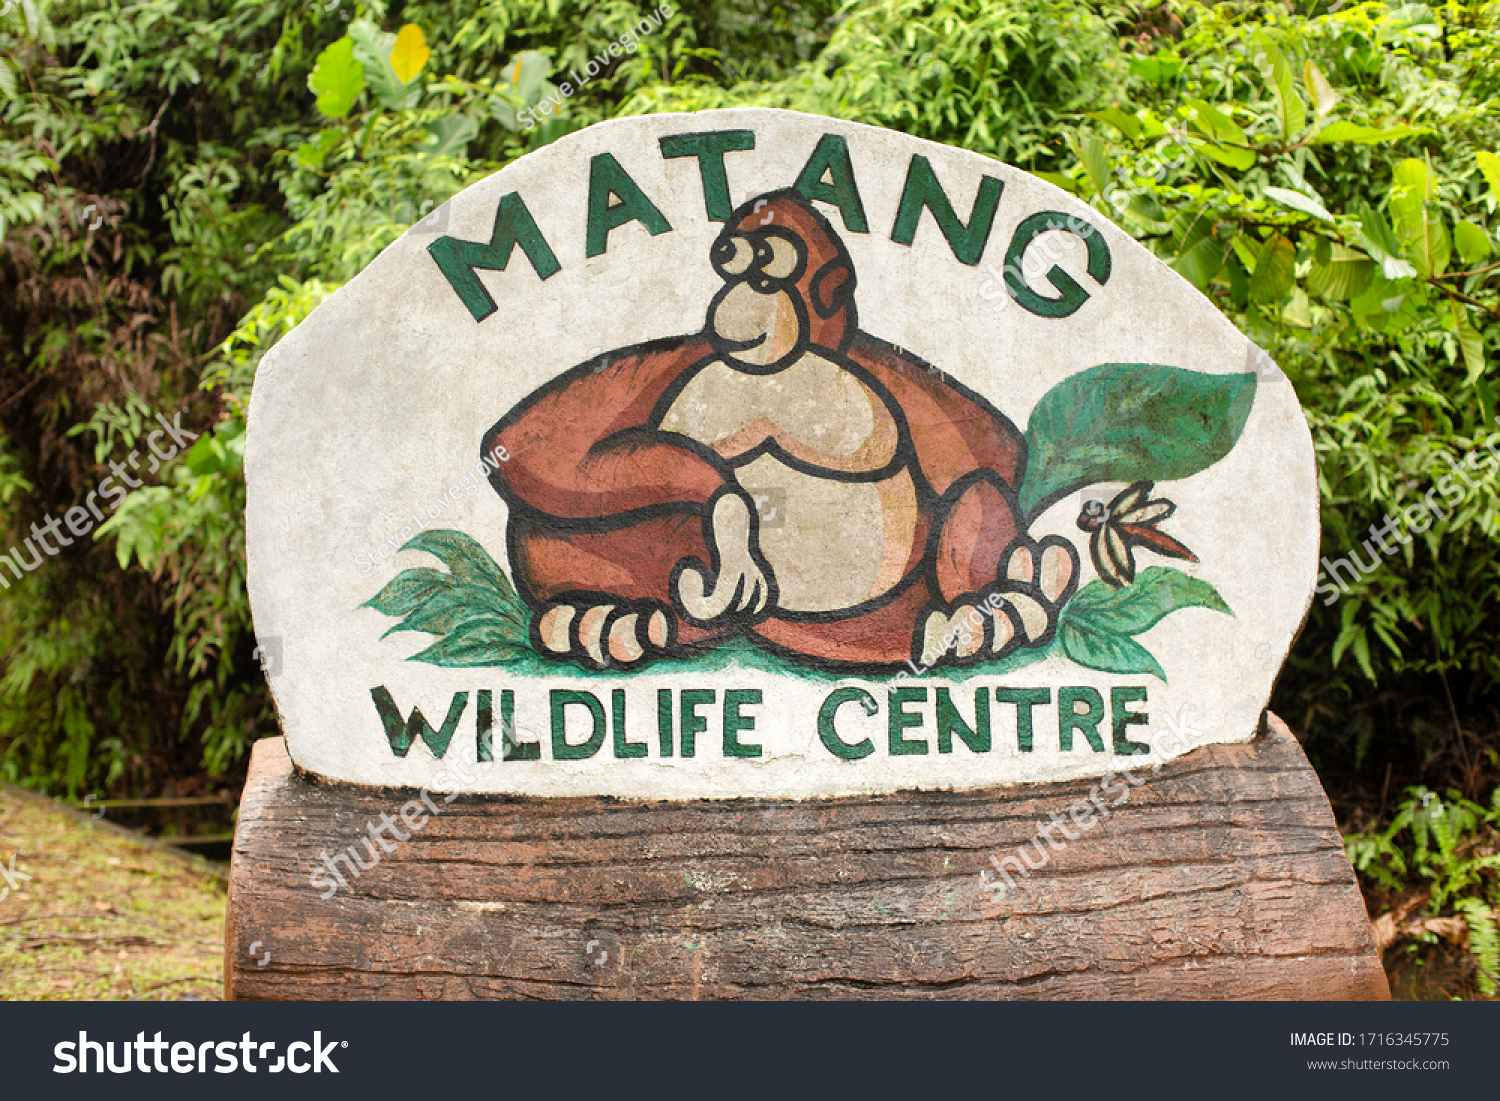 Wildlife centre matang Getting close